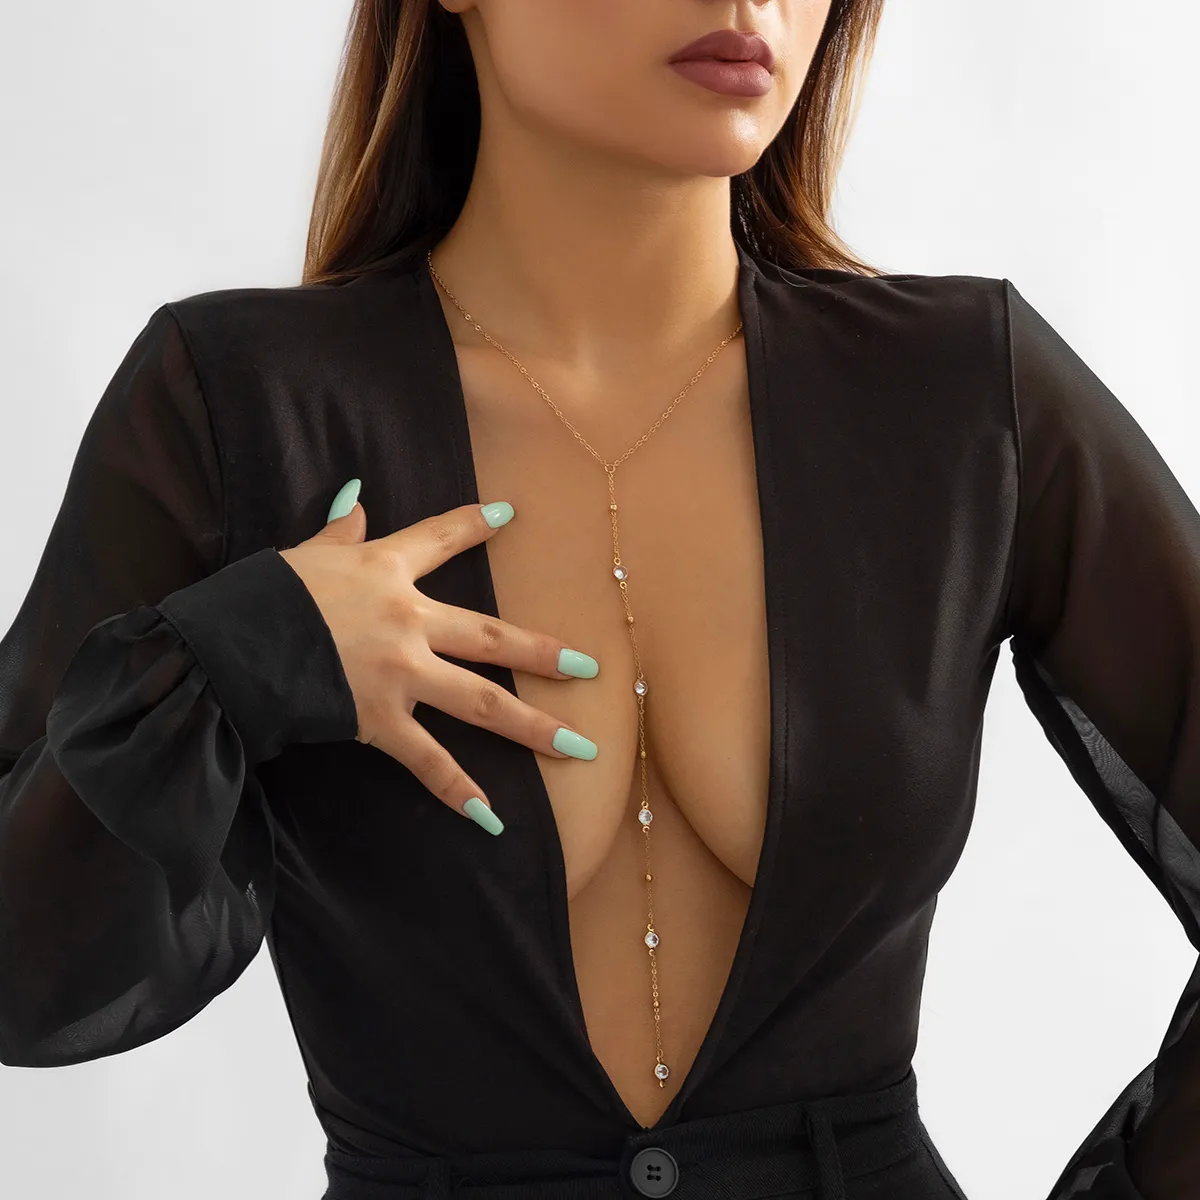 Bohemian Long Tassel Necklace For Women Fashion Crystal Glass Pendant Imitation Pearl Chain Choker Wedding Party Jewelry